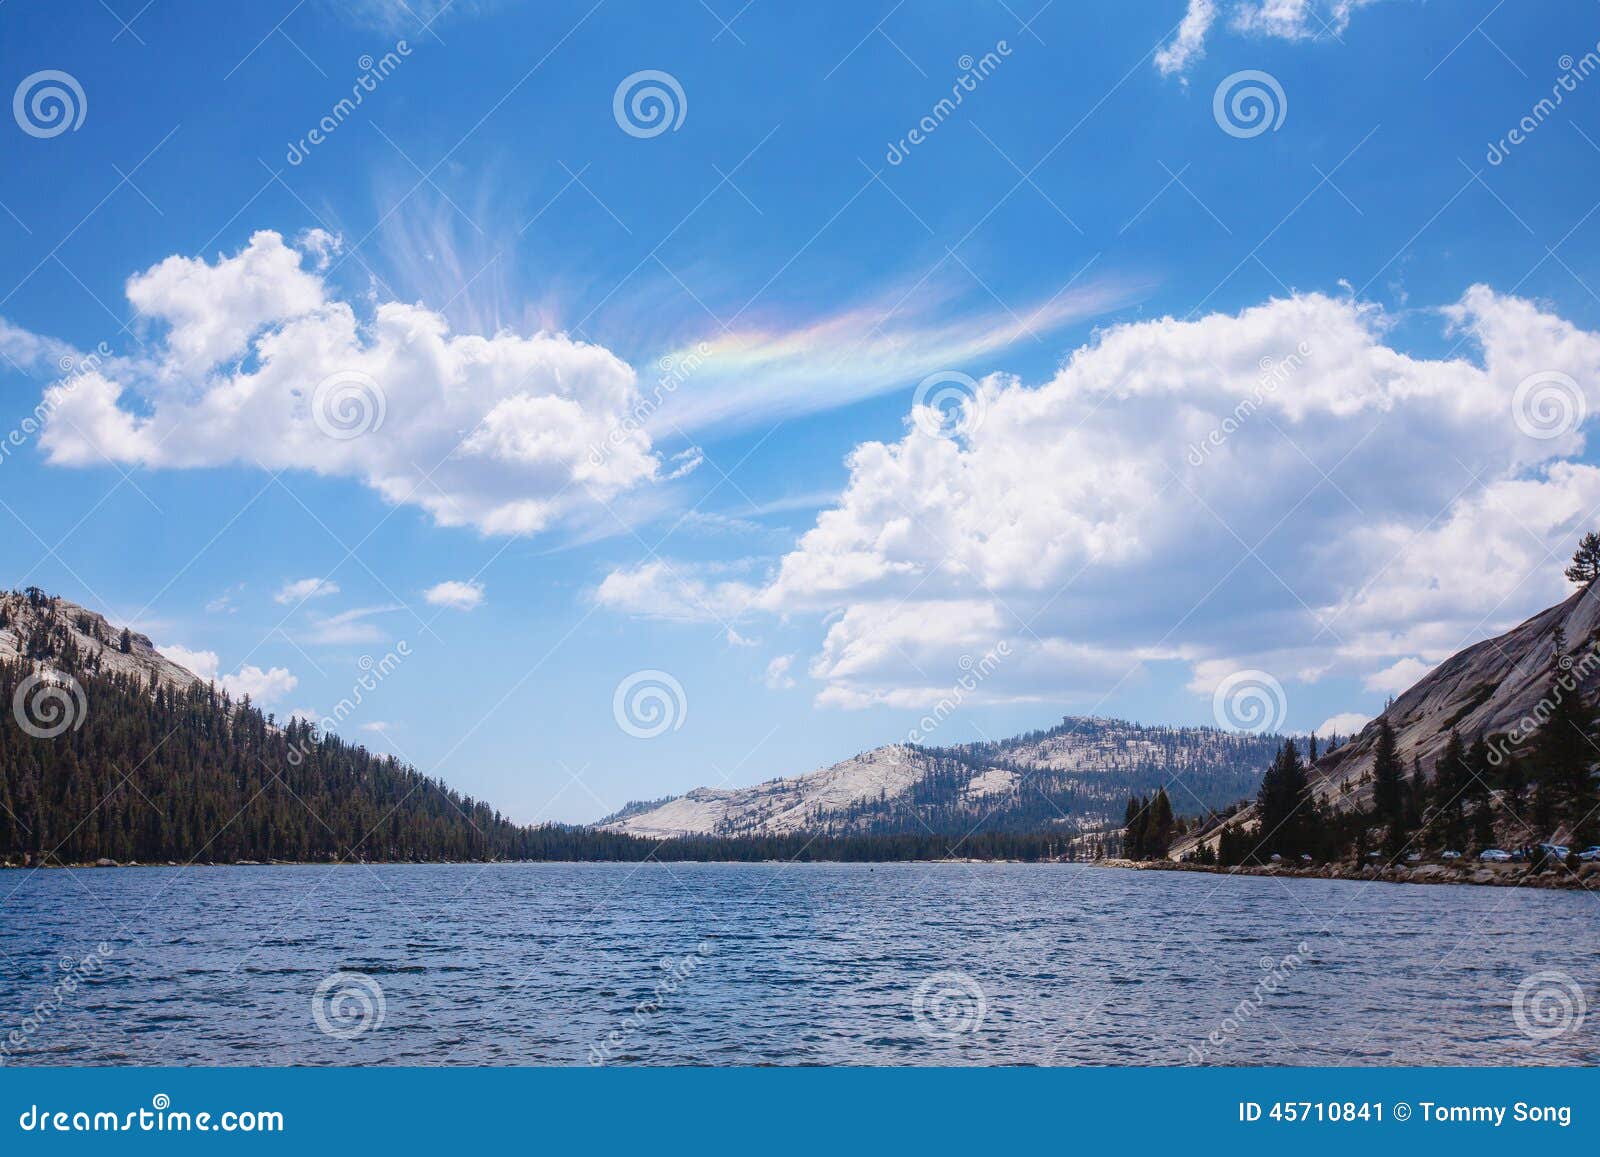 tenaya lake with optical phenomena in sky